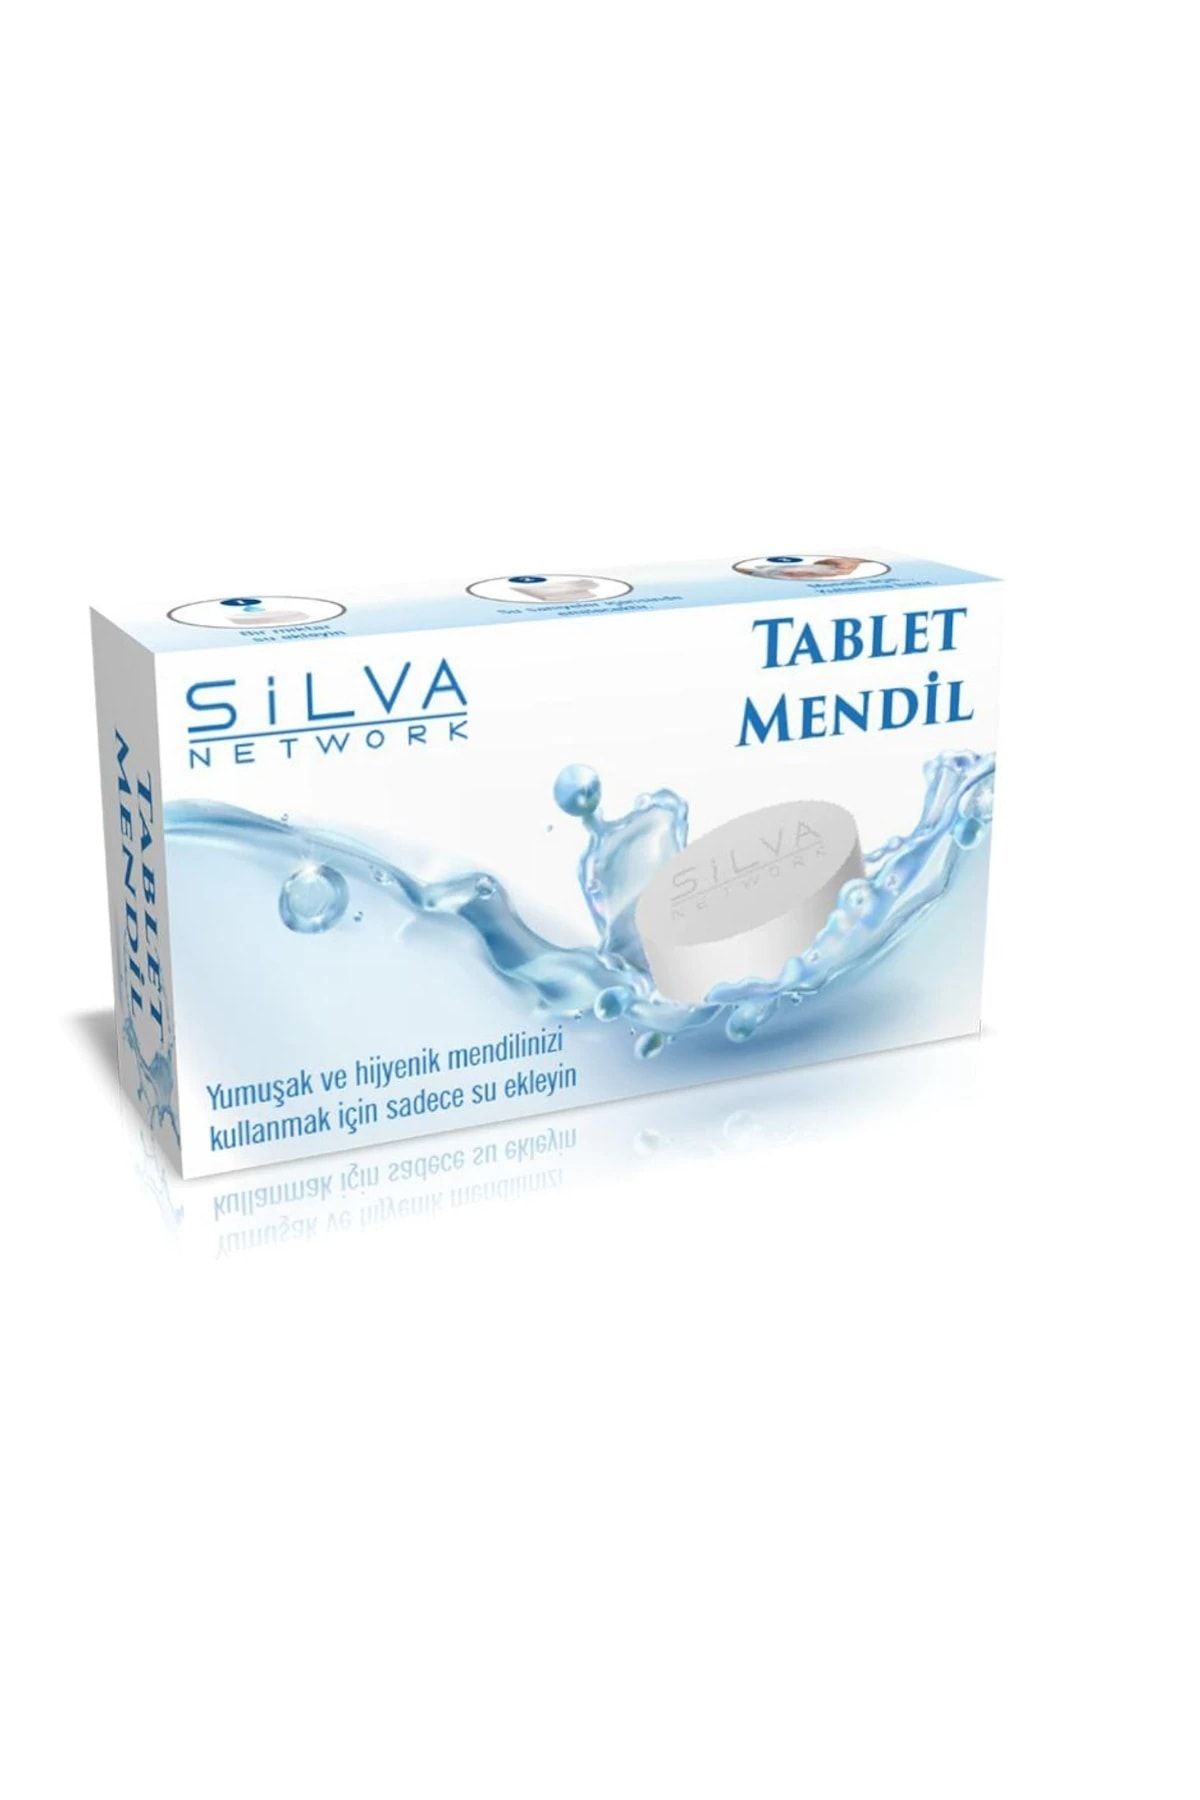 Silva Tablet Mendil (12'li)